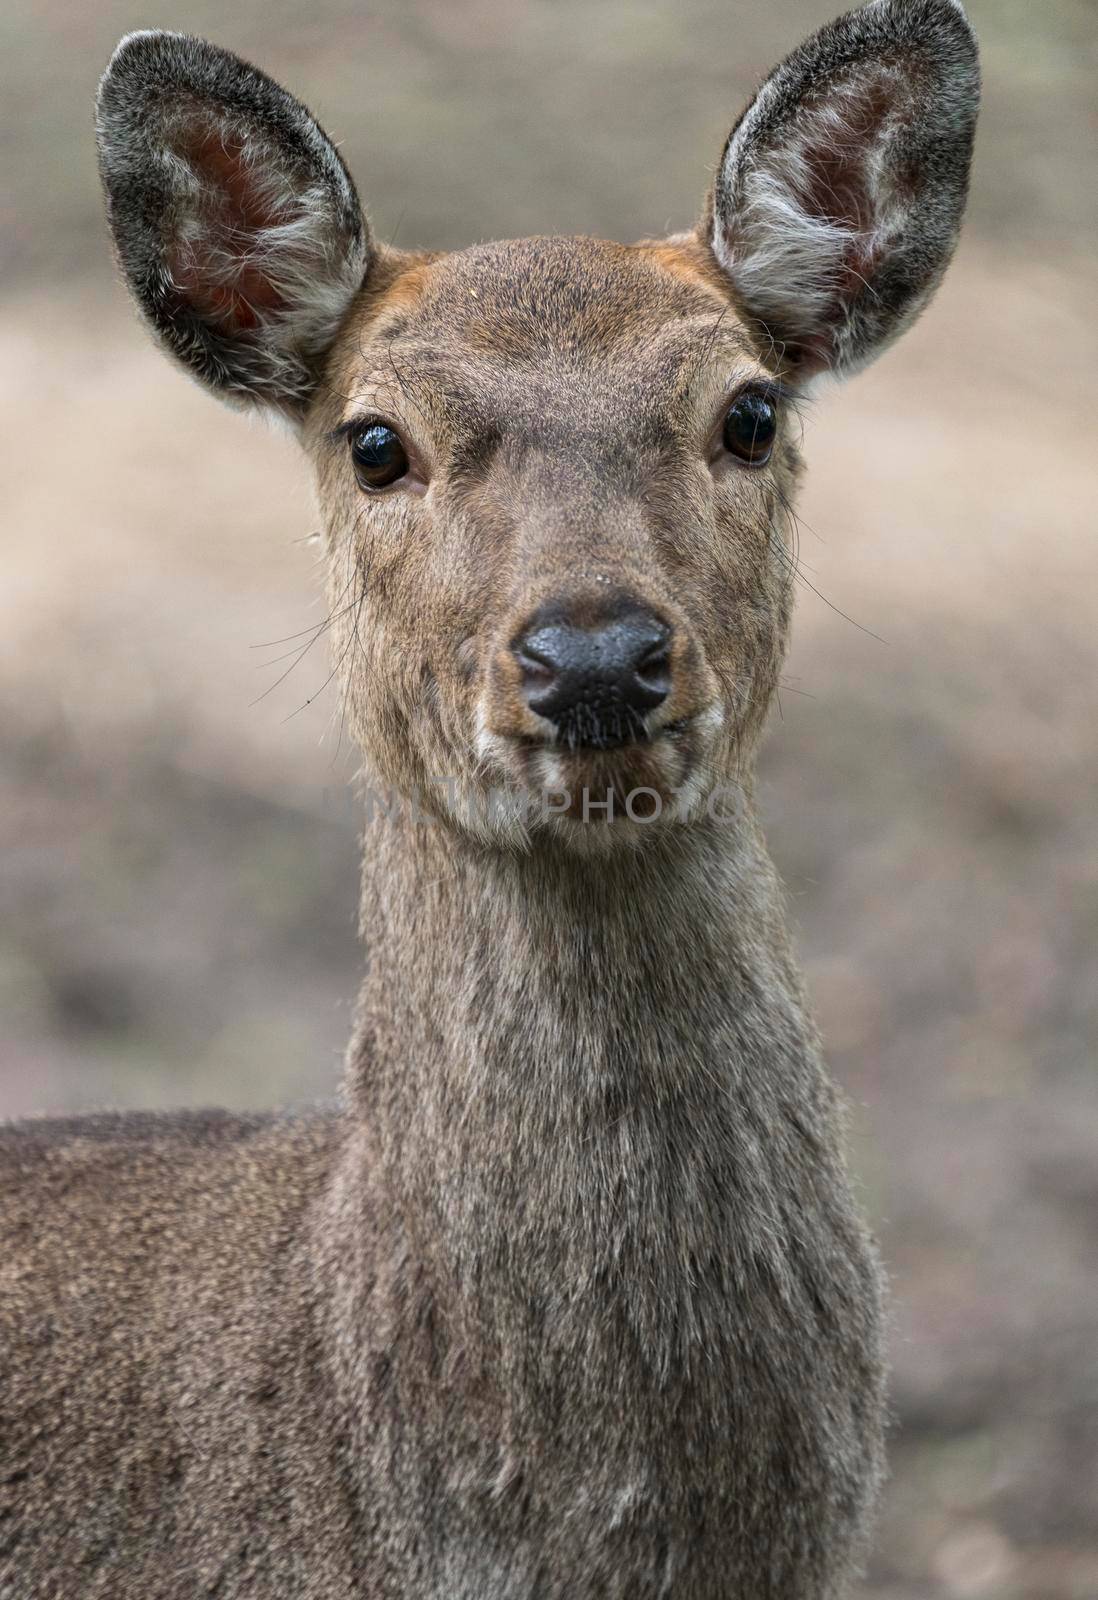 Dappled deer close-up portrait captured in the wild by Arsgera